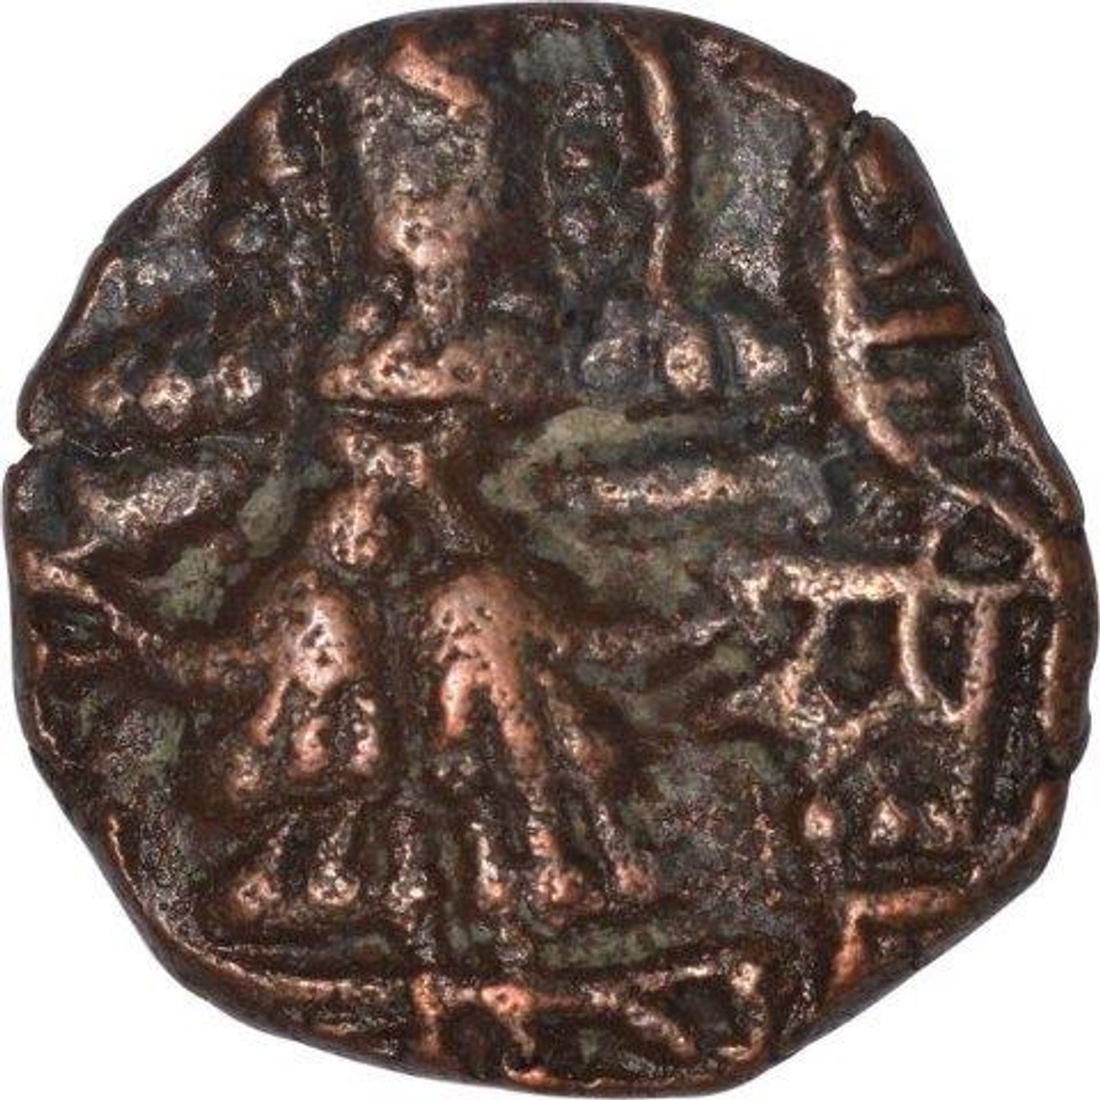 Copper Drachma Coin  of Toramana II of Huna Dynasty.